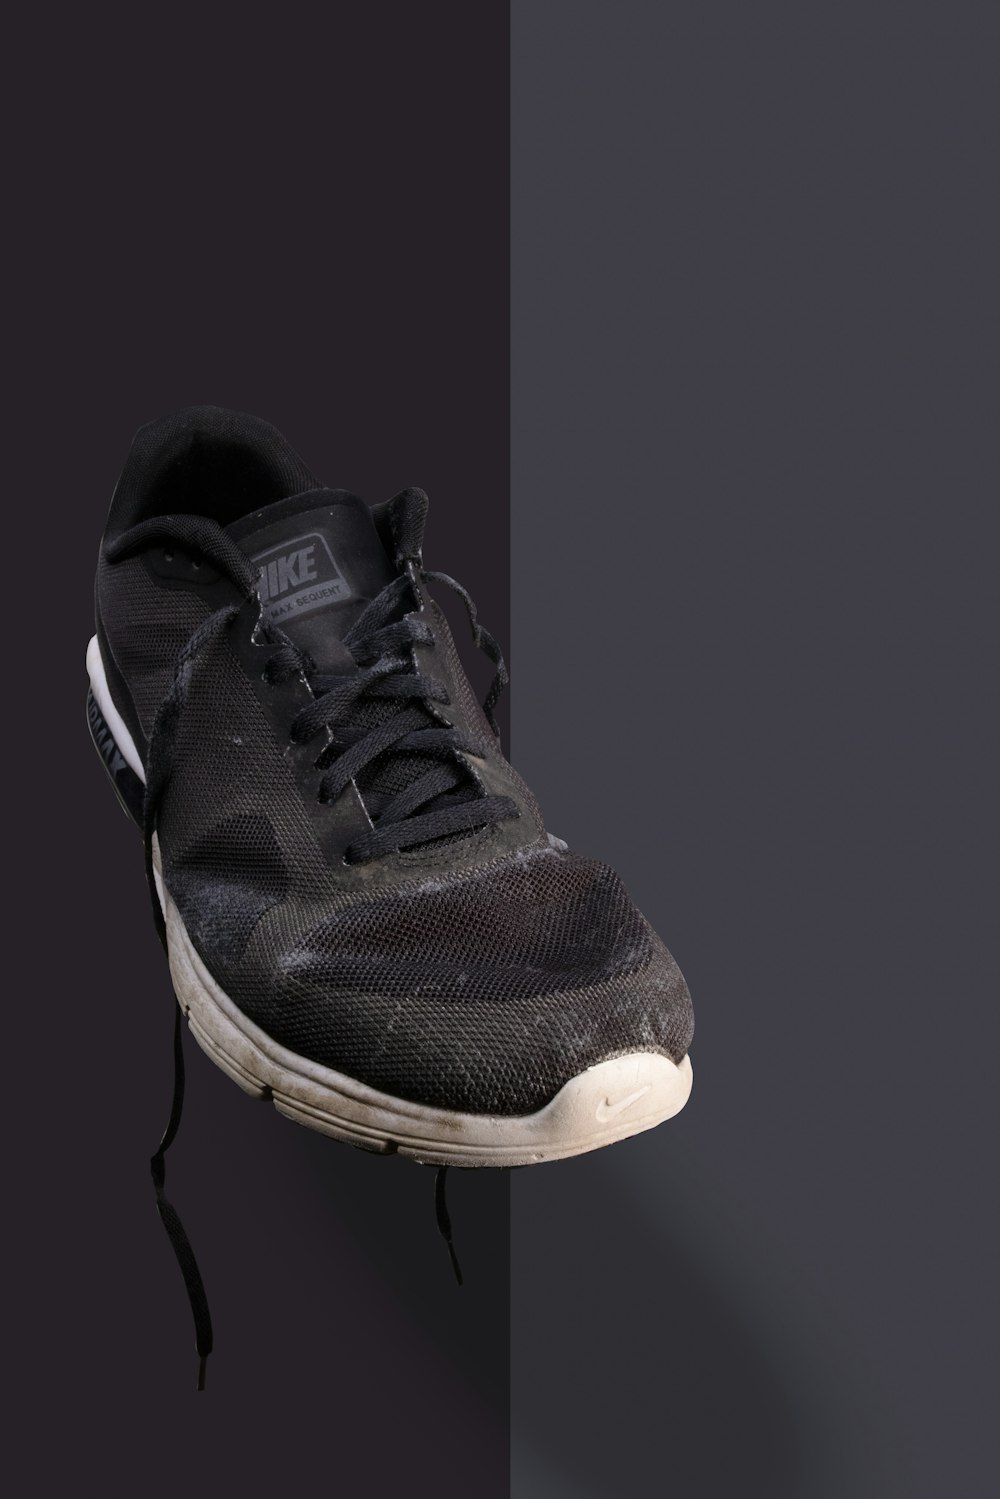 black and white nike athletic shoe